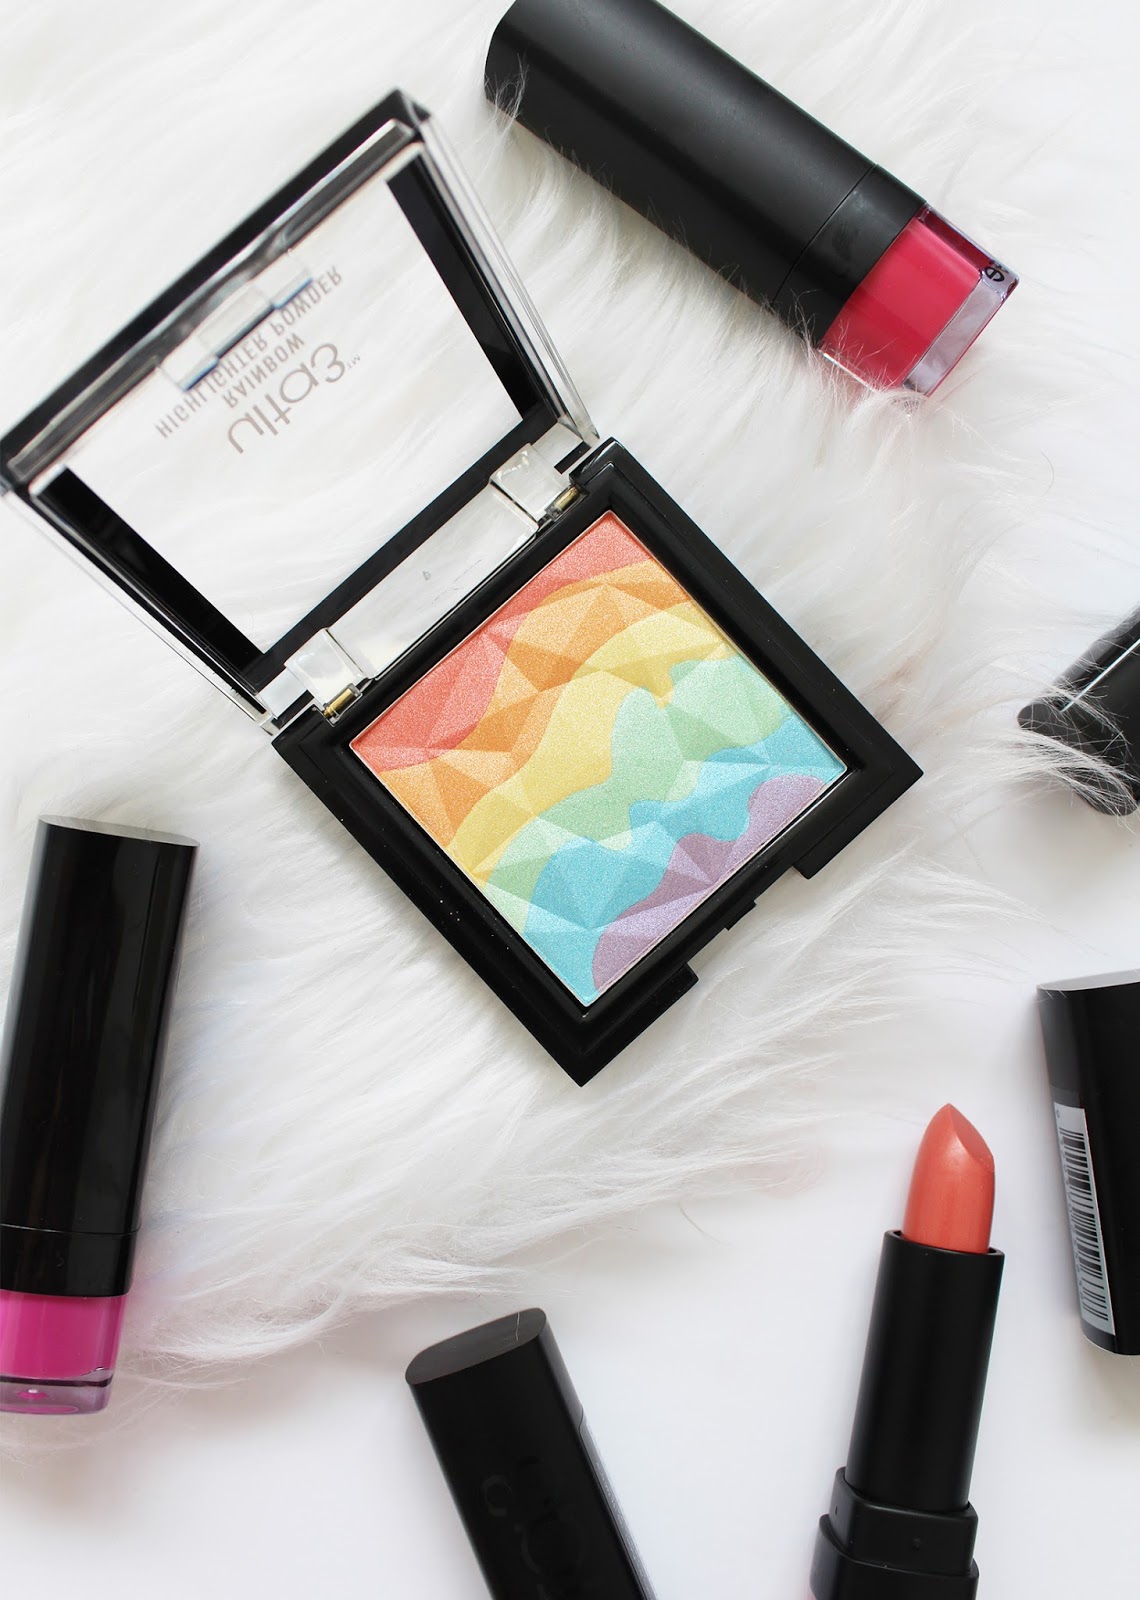 ULTA3 | New Products - Lipsticks, Tanning + Rainbow Highlighter - CassandraMyee